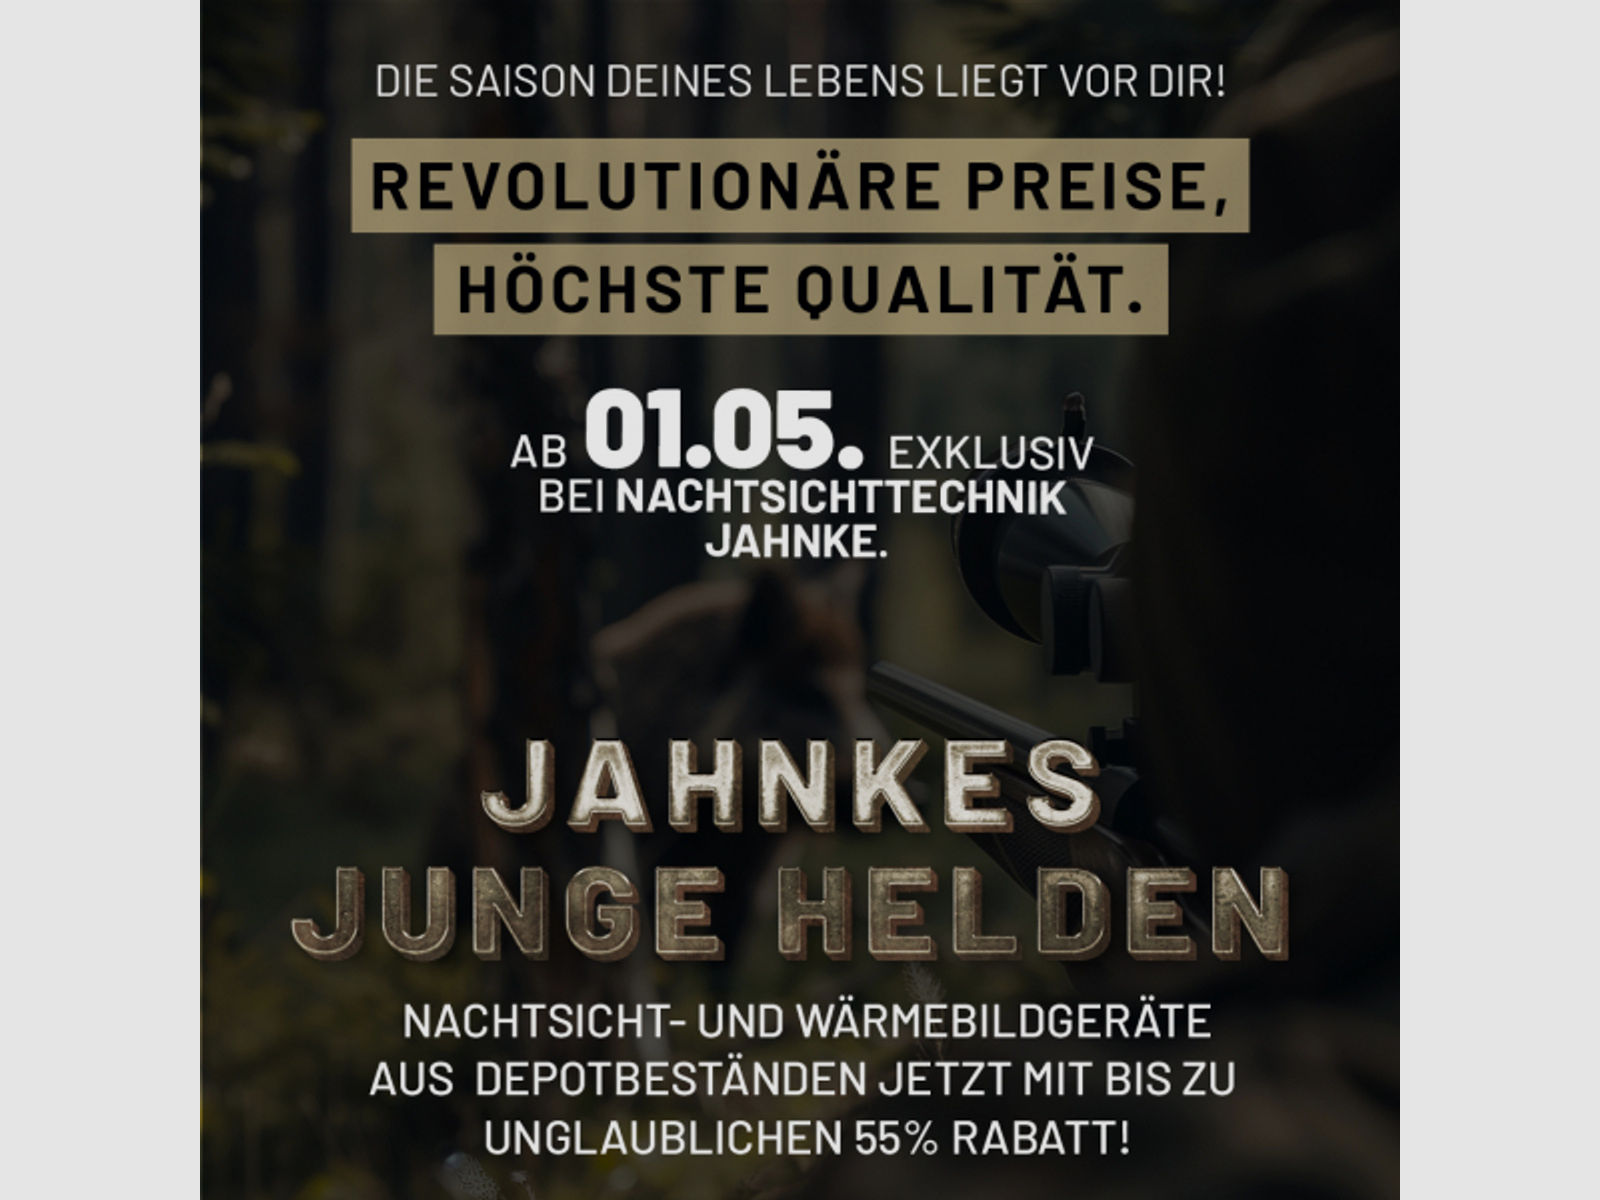 Nachtsichttechnik Jahnke DJ-8 4x48 JJH LK 3 S 2, Jahnke Monochrom (Grau)